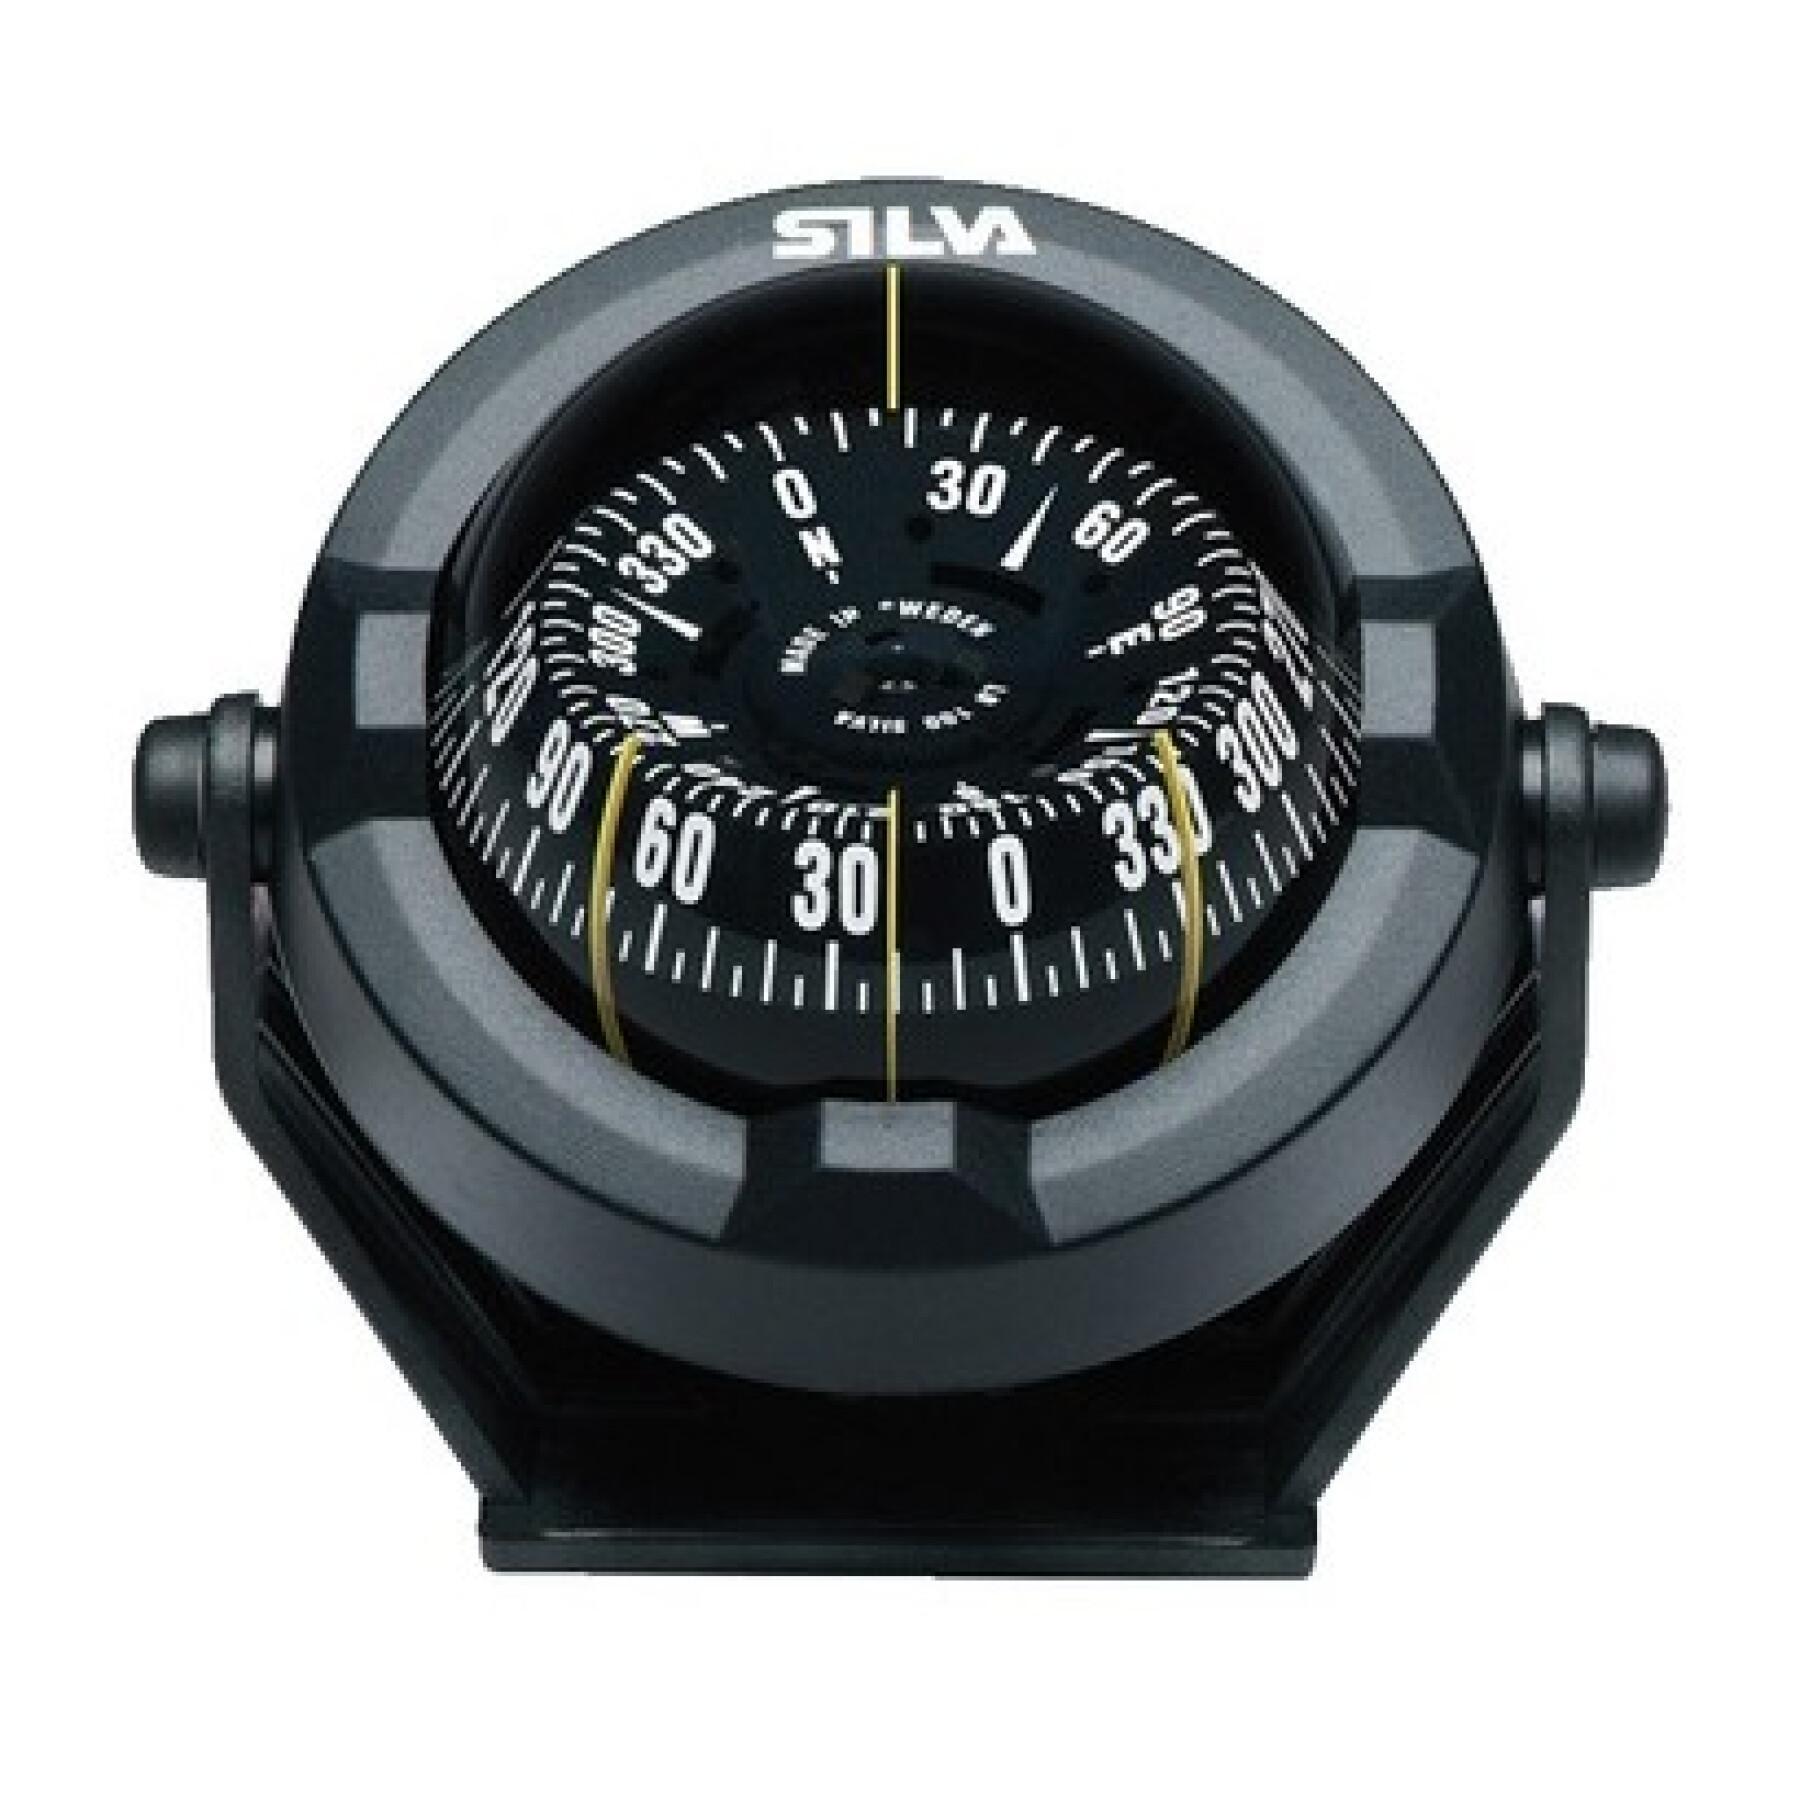 Caliper mount compass, lighting and compensation Silva 100BC